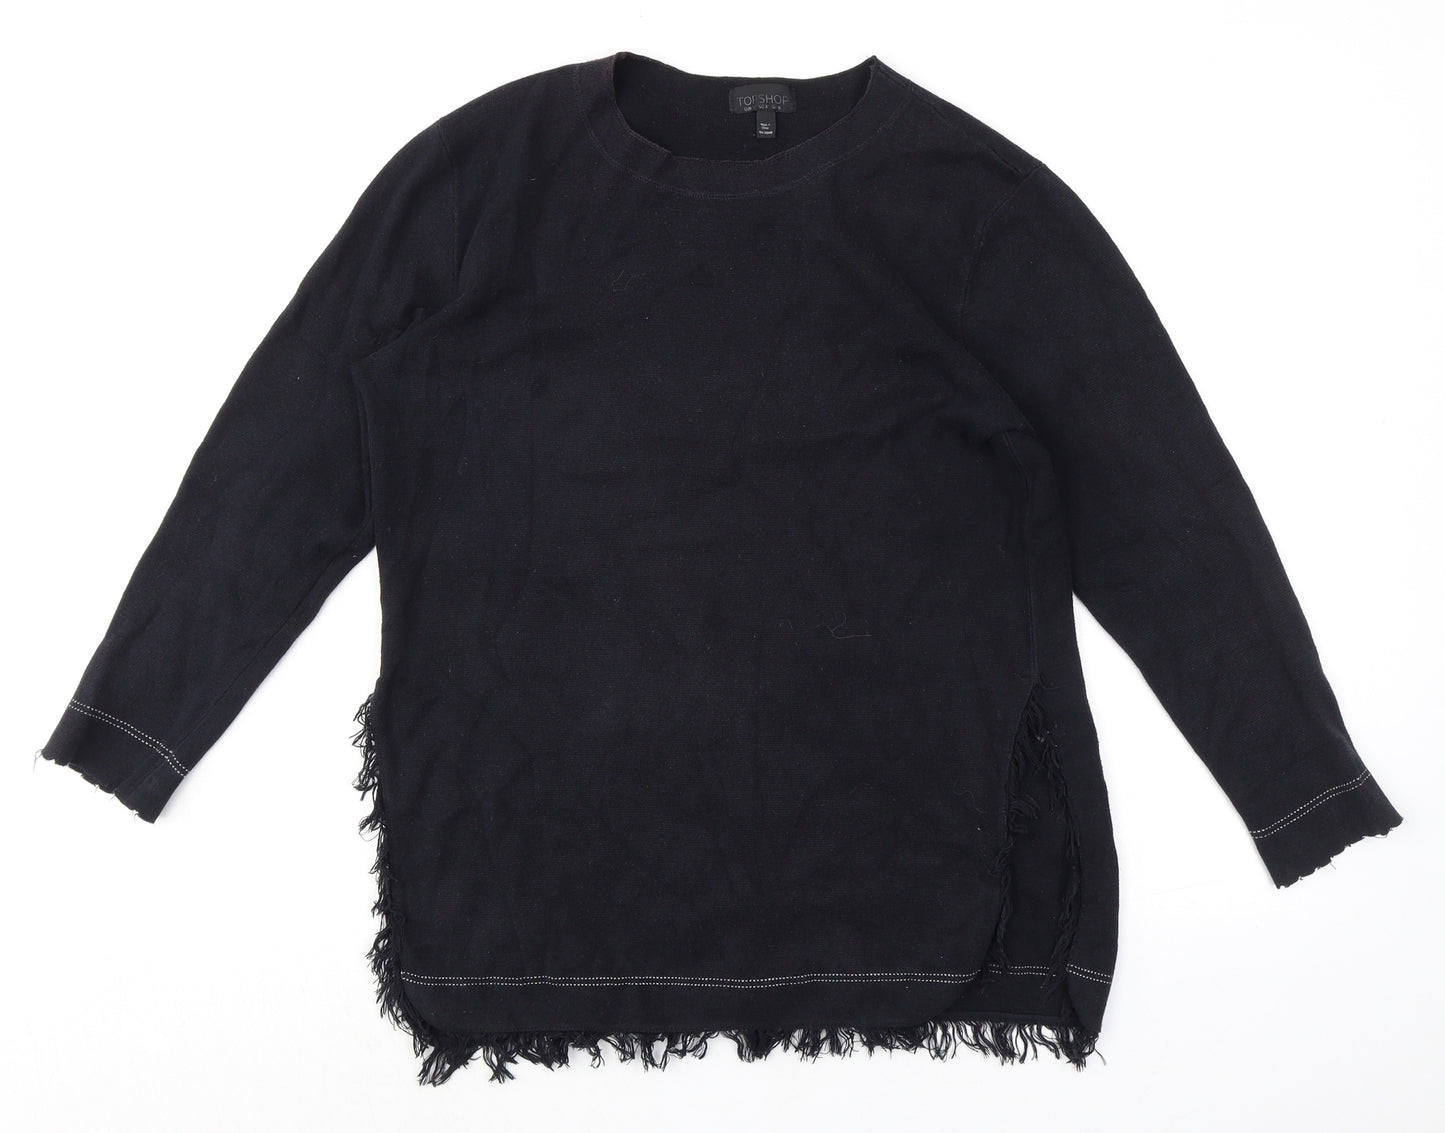 Topshop Womens Black Crew Neck 100% Cotton Pullover Jumper Size 8